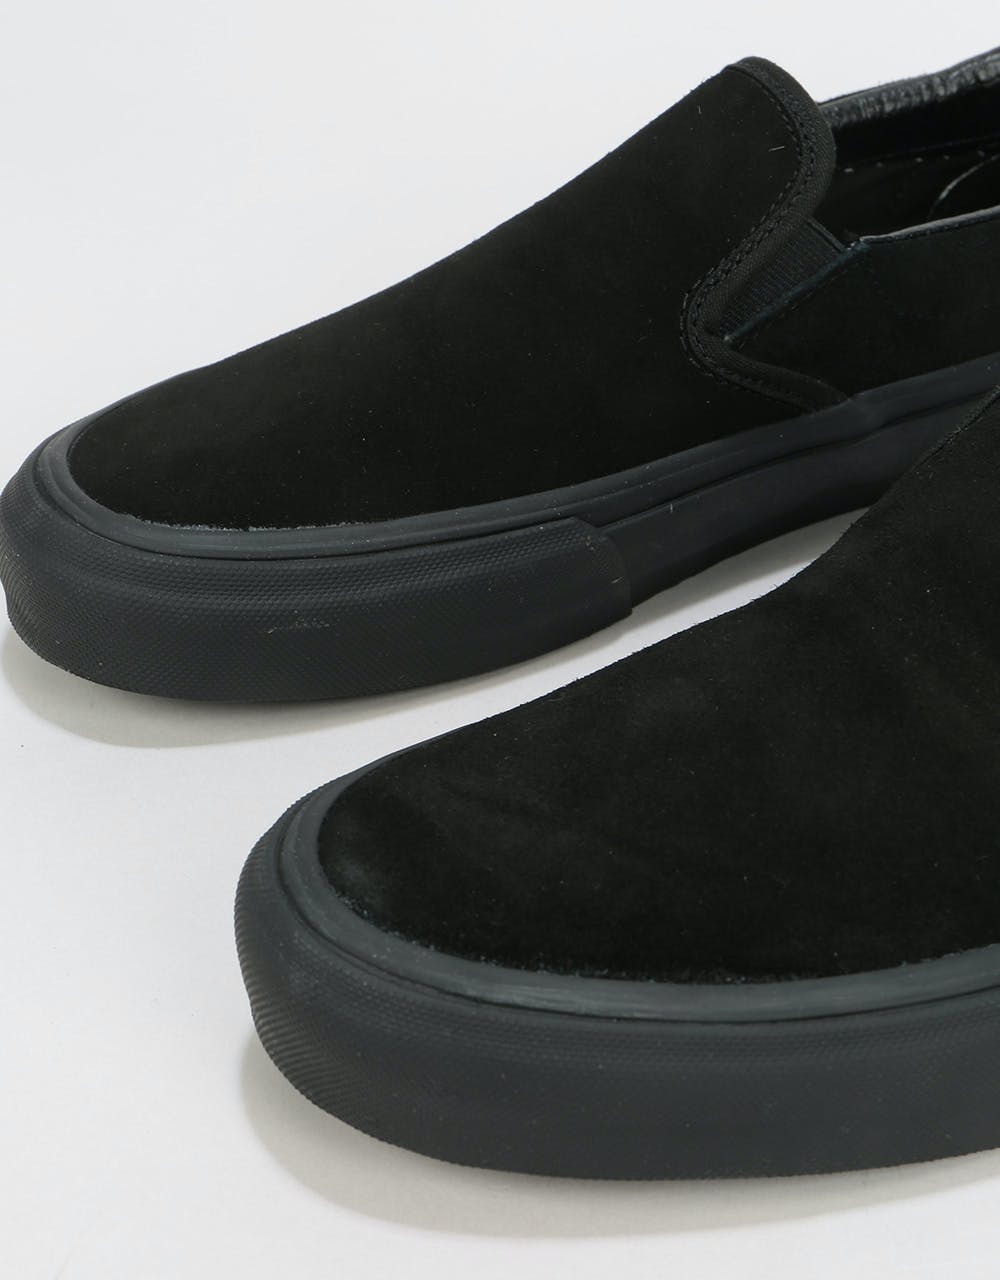 Straye Ventura Slip-On Skate Shoes - Black/Black Suede